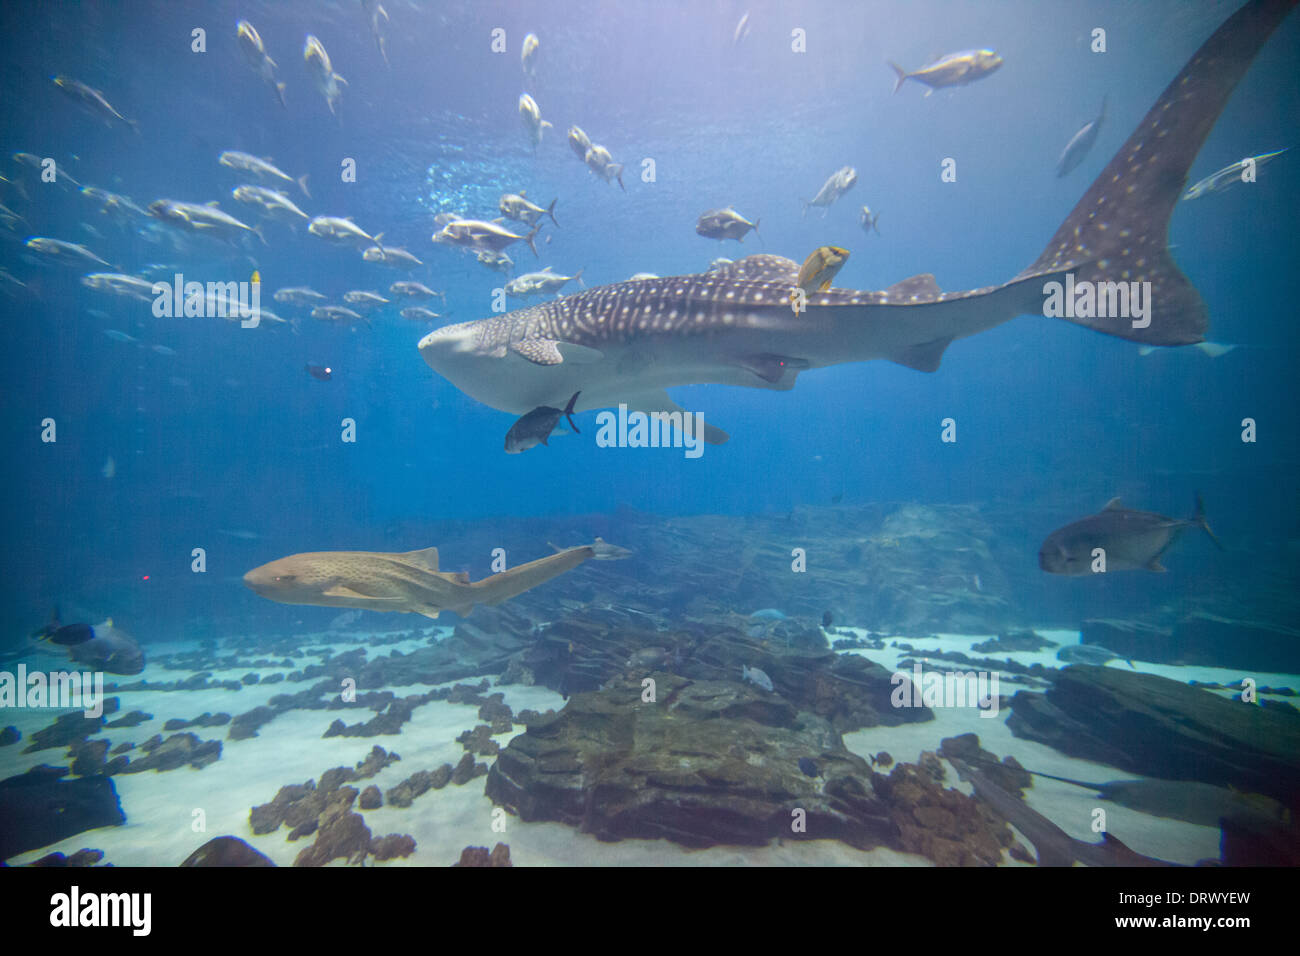 The main exhibit at Atlanta's Aquarium featuring numerous shark and fish of all kinds. Stock Photo